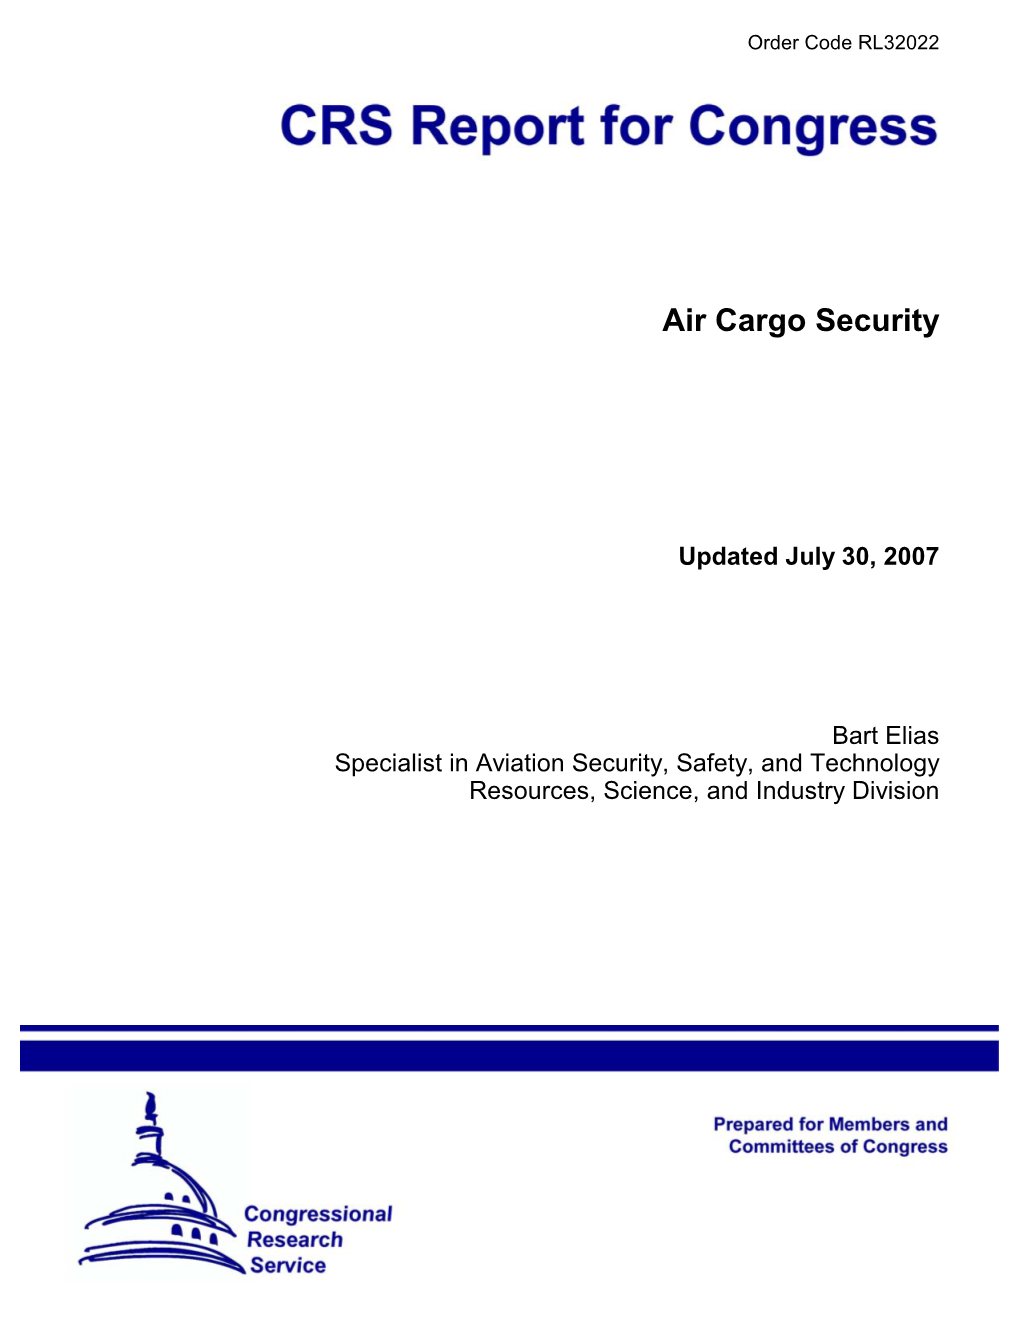 Air Cargo Security